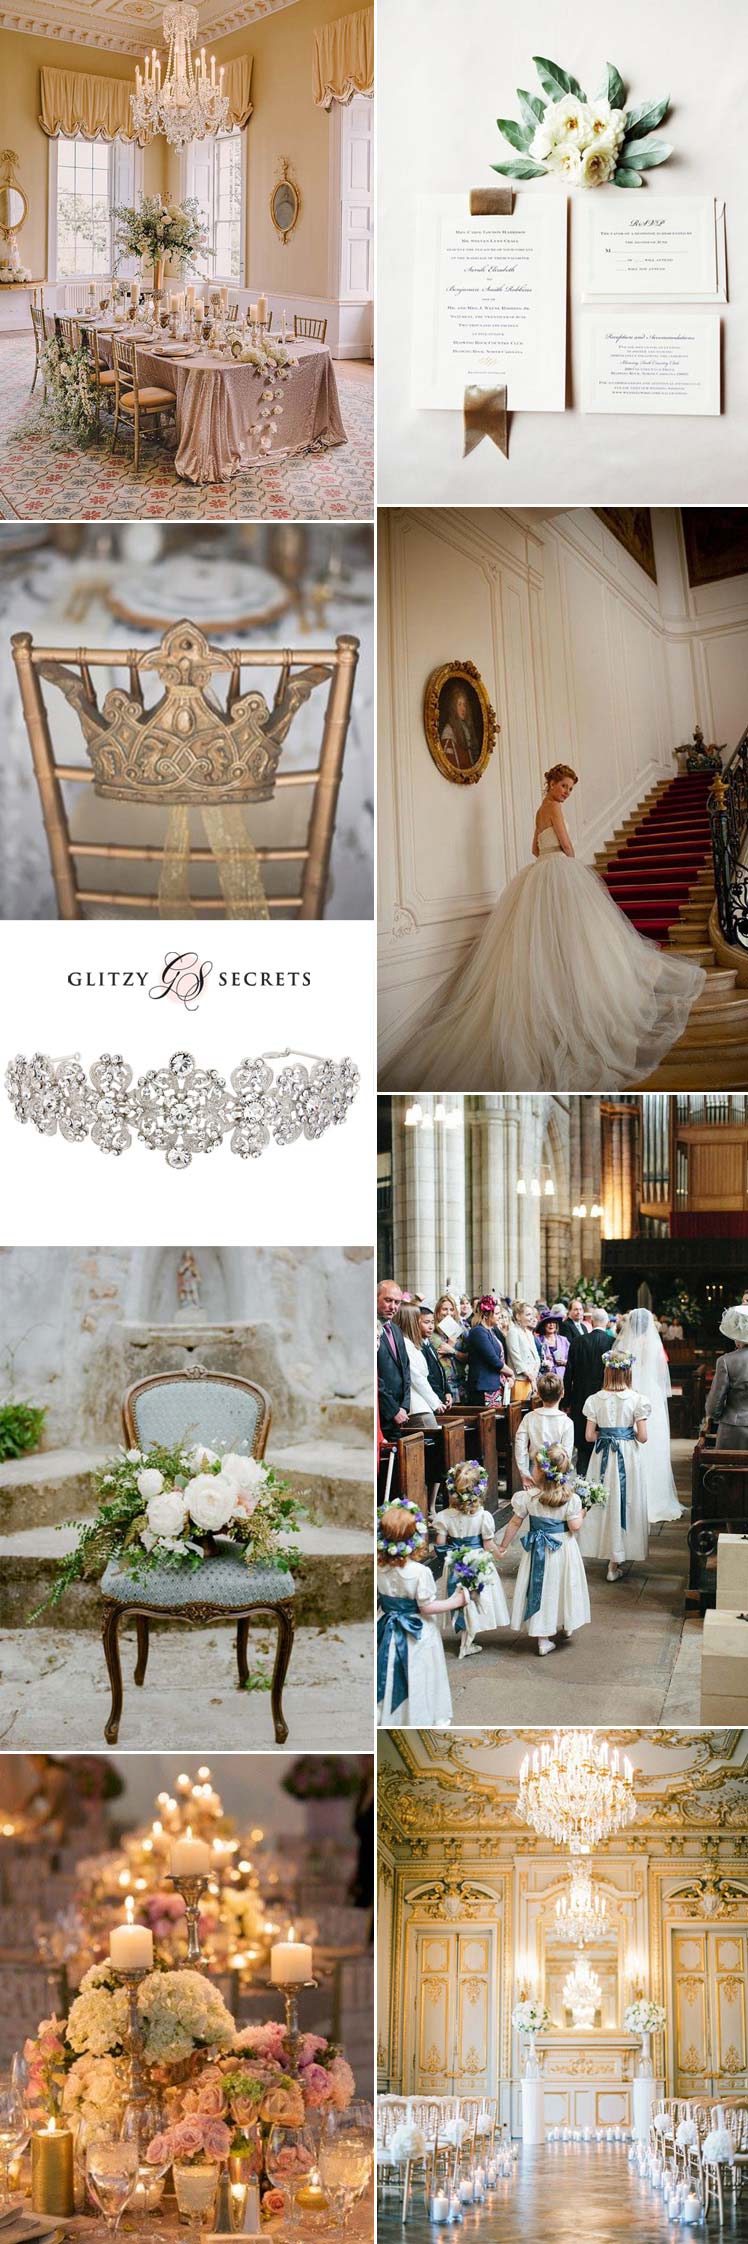 Ideas for a royal wedding theme